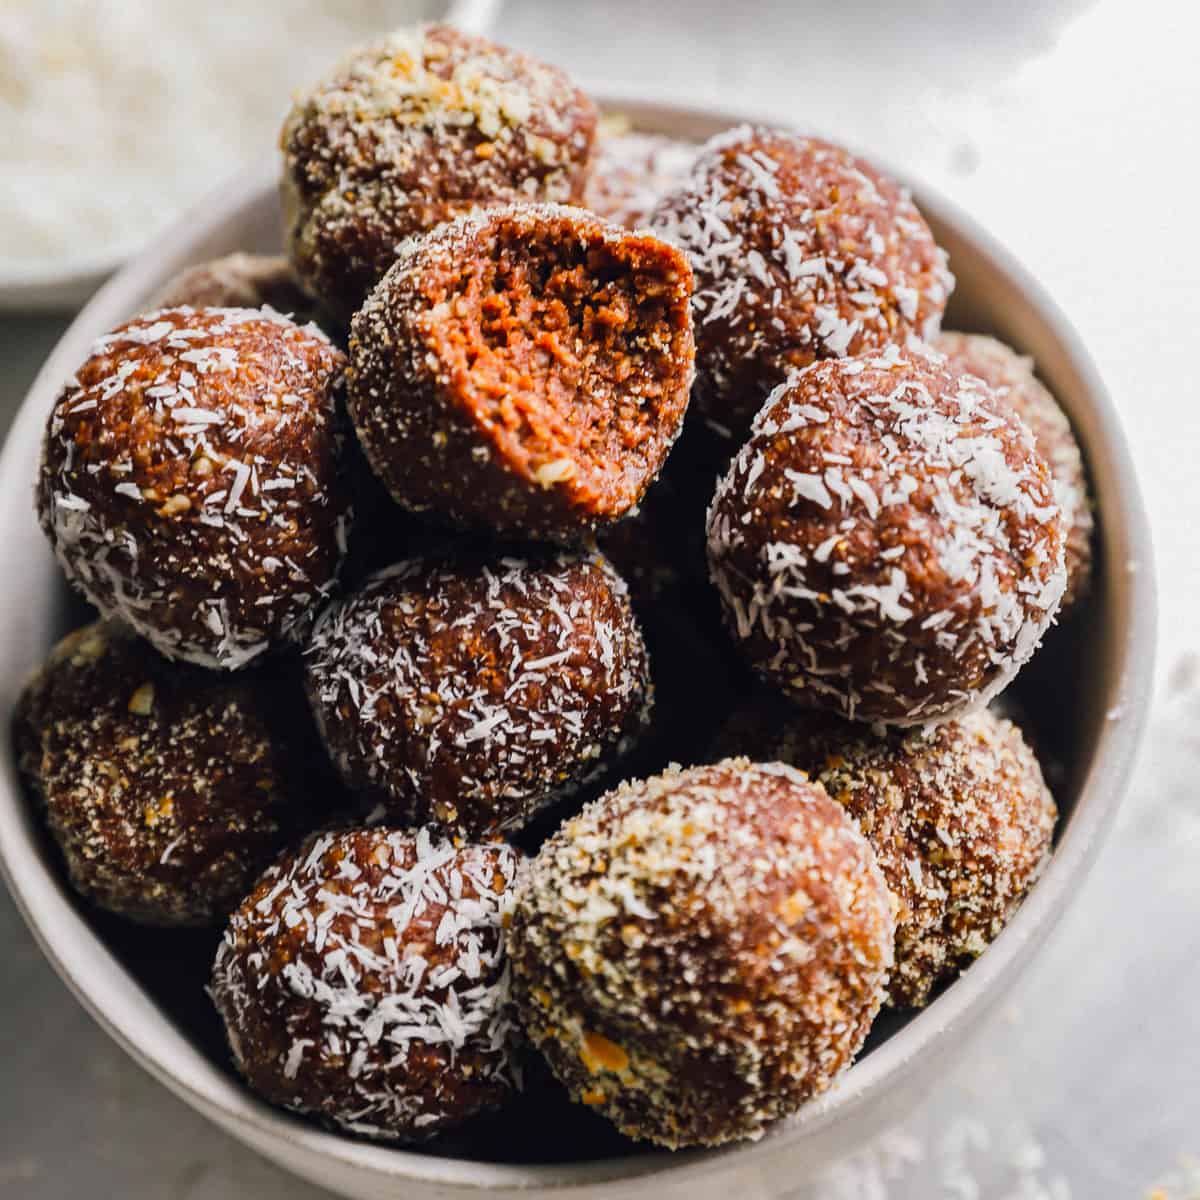 https://www.thecookierookie.com/wp-content/uploads/2022/12/square-coconut-rum-balls-recipe.jpg